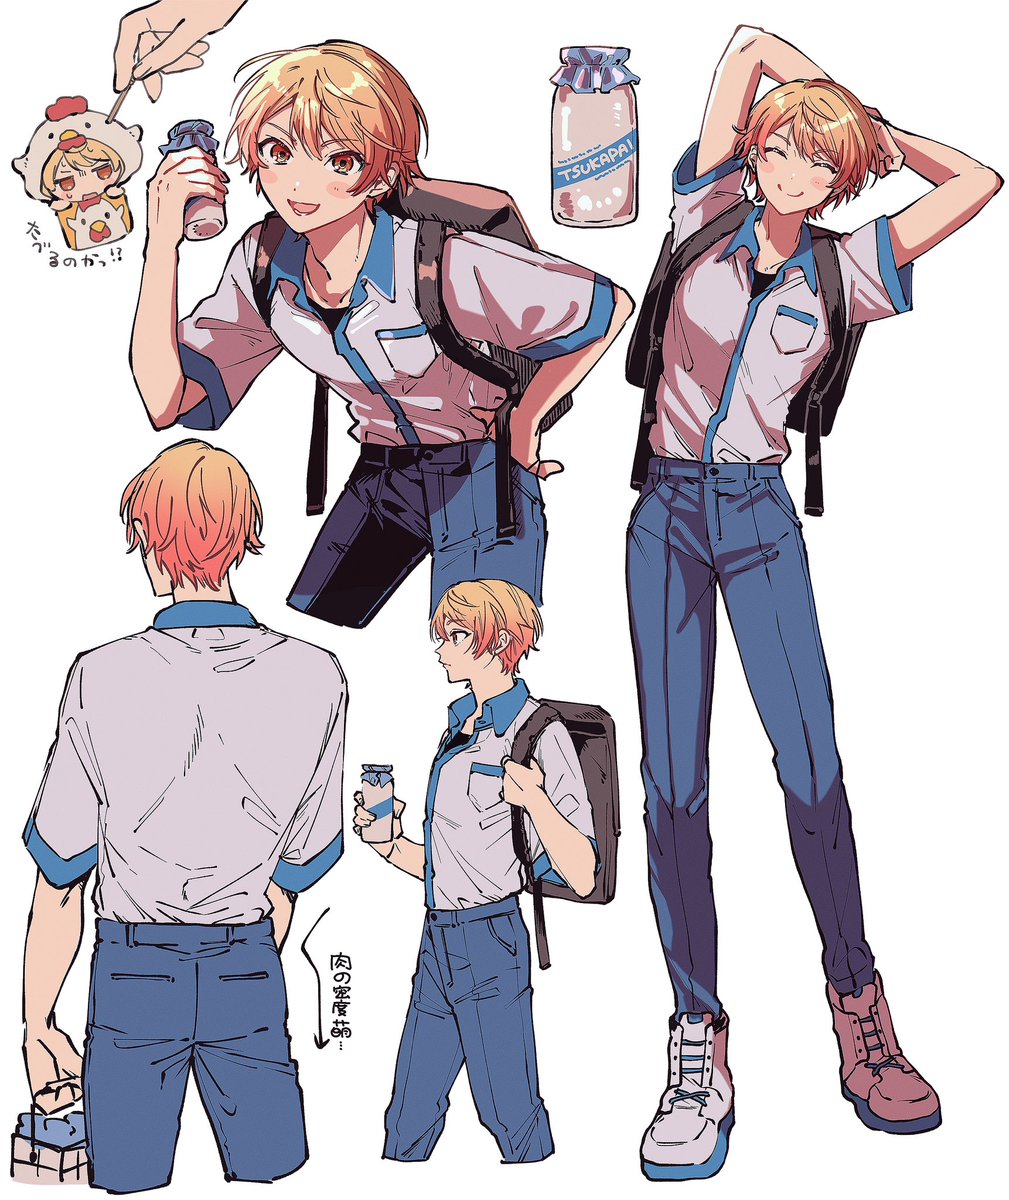 tenma tsukasa backpack bag pants blonde hair shirt short hair smile  illustration images